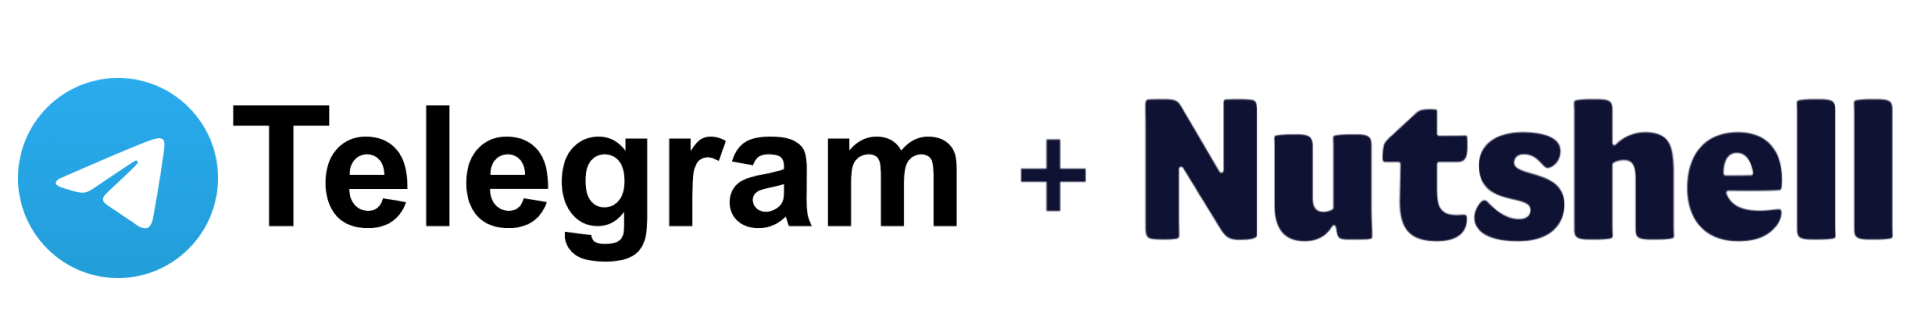 Telegram and Nutshell logos integration graphic